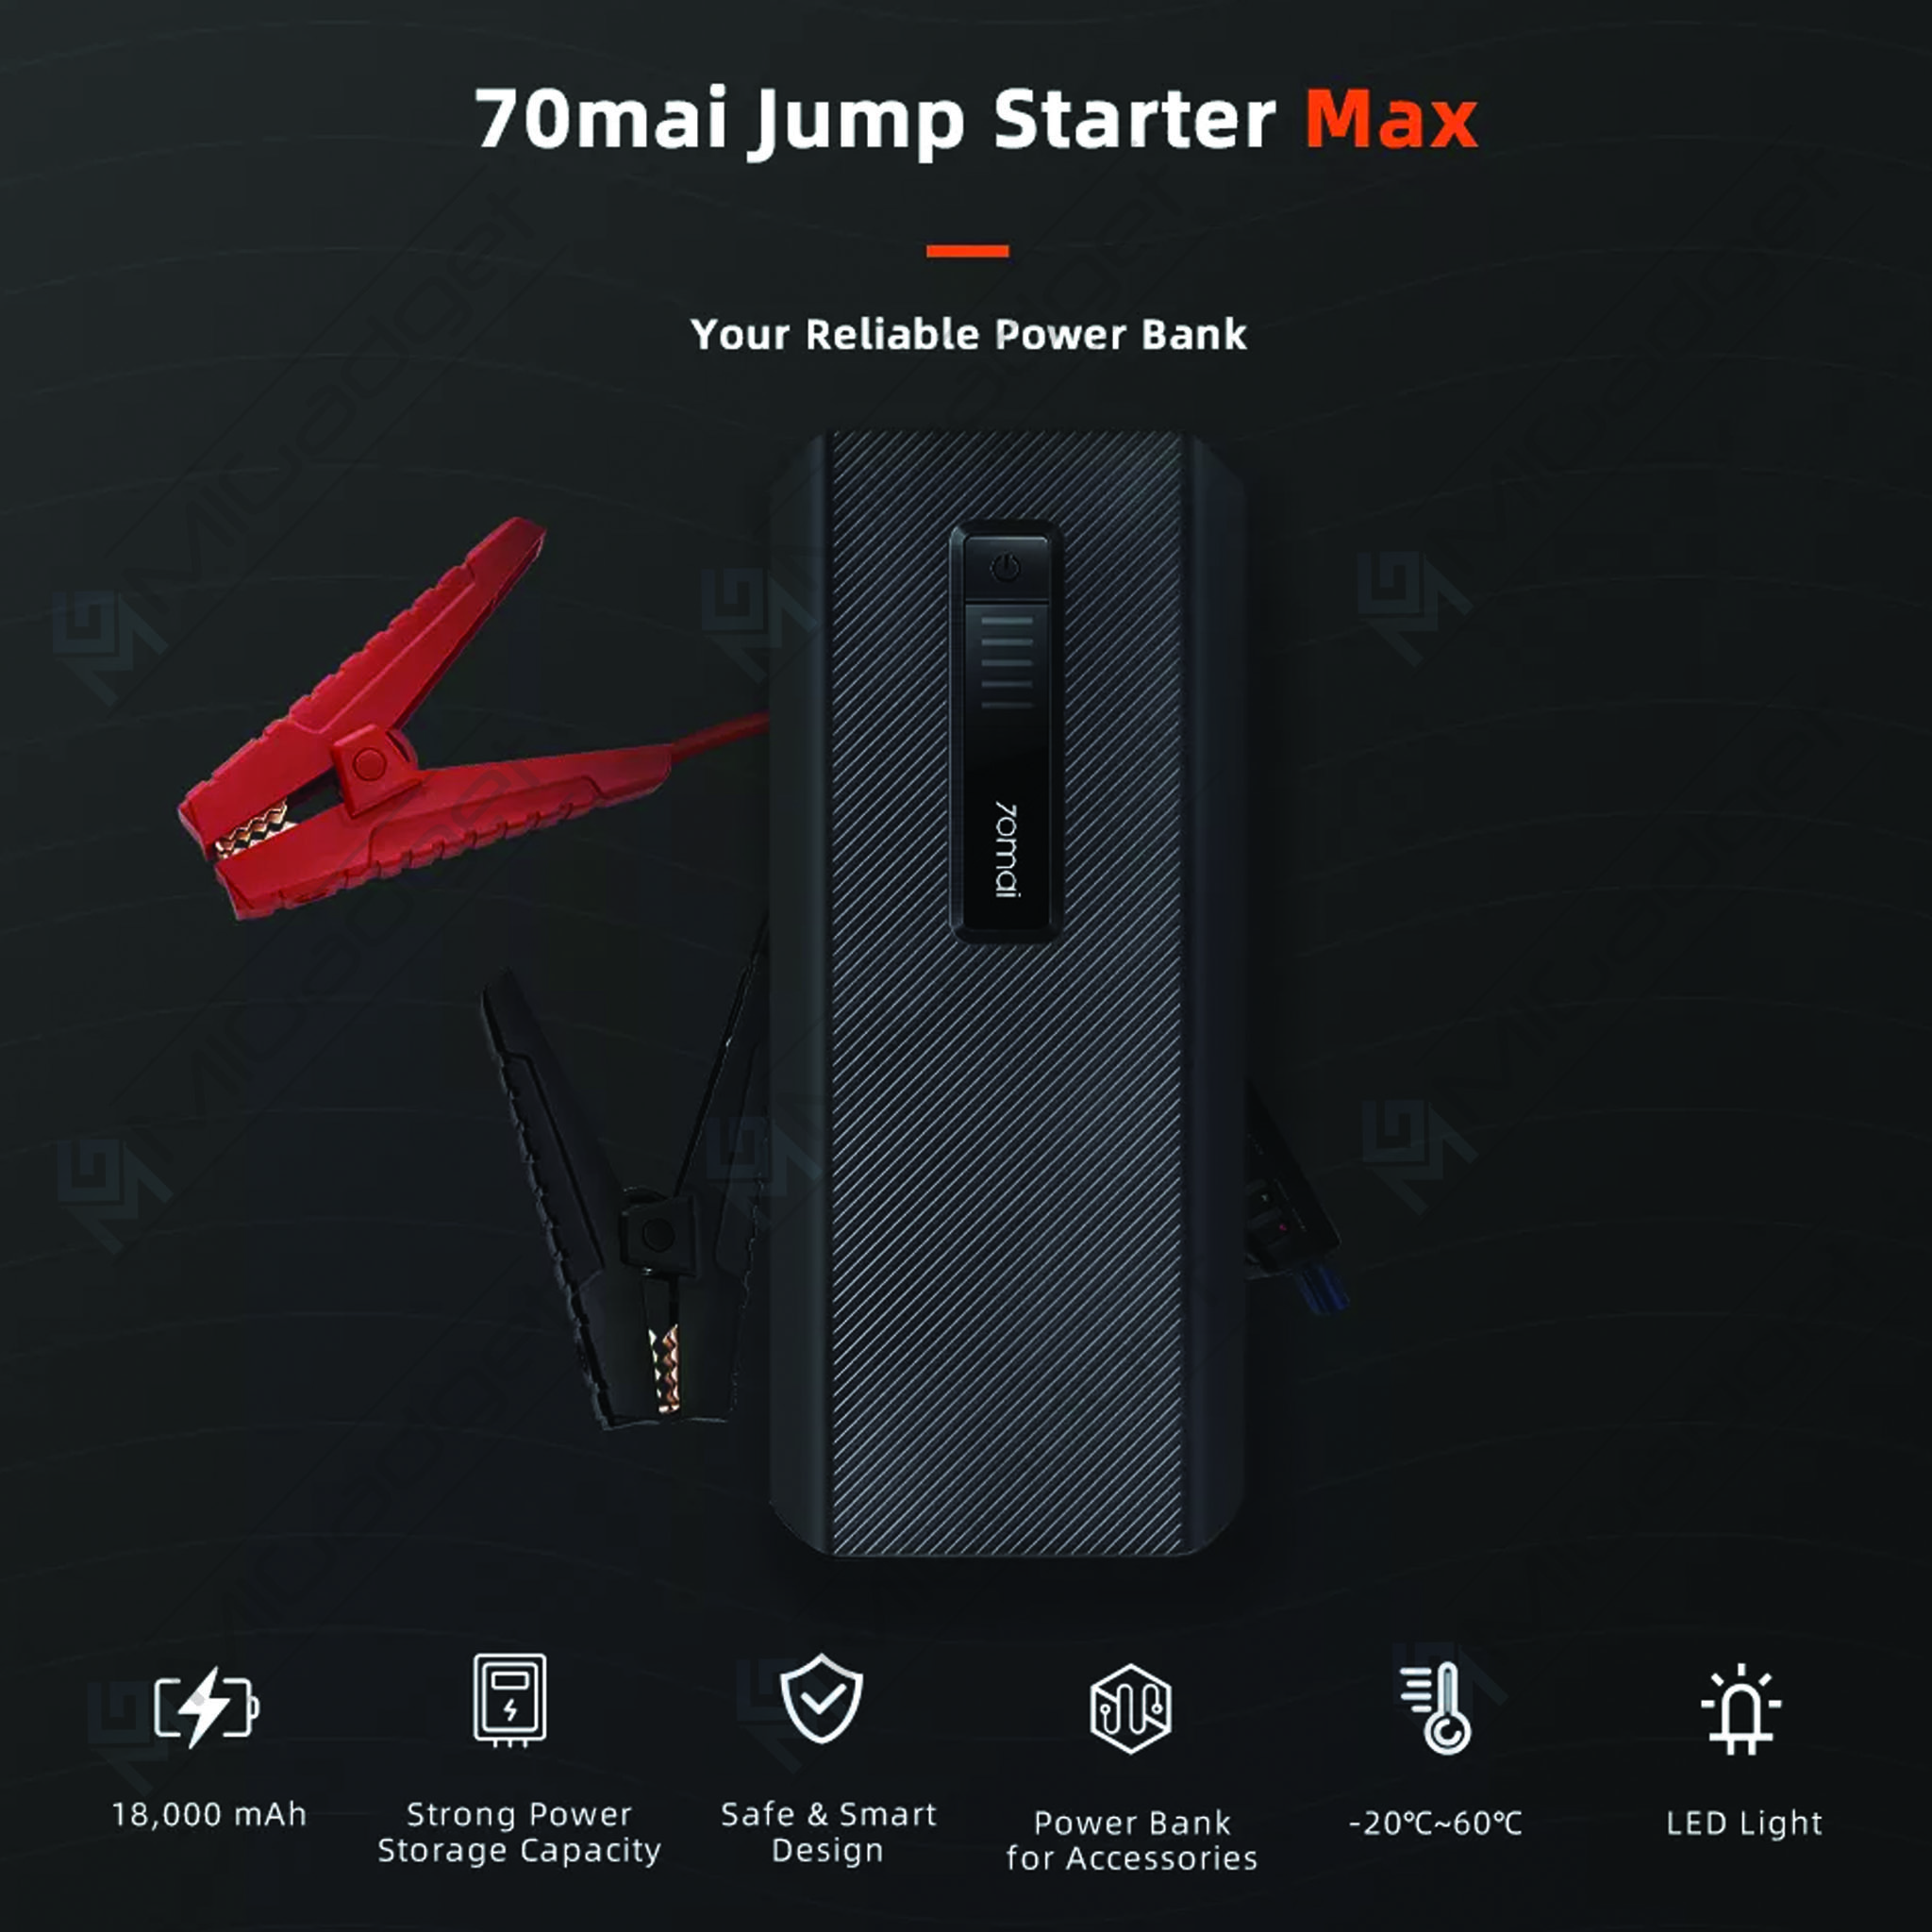 Starter max midrive ps06. Xiaomi 70mai Jump Starter Max MIDRIVE ps06. Xiaomi 70mai Jump Starter Max 18000mah. Xiaomi 70mai Jump Starter Max. Пуско-зарядное устройство 70mai Jump Starter Max MIDRIVE ps06.